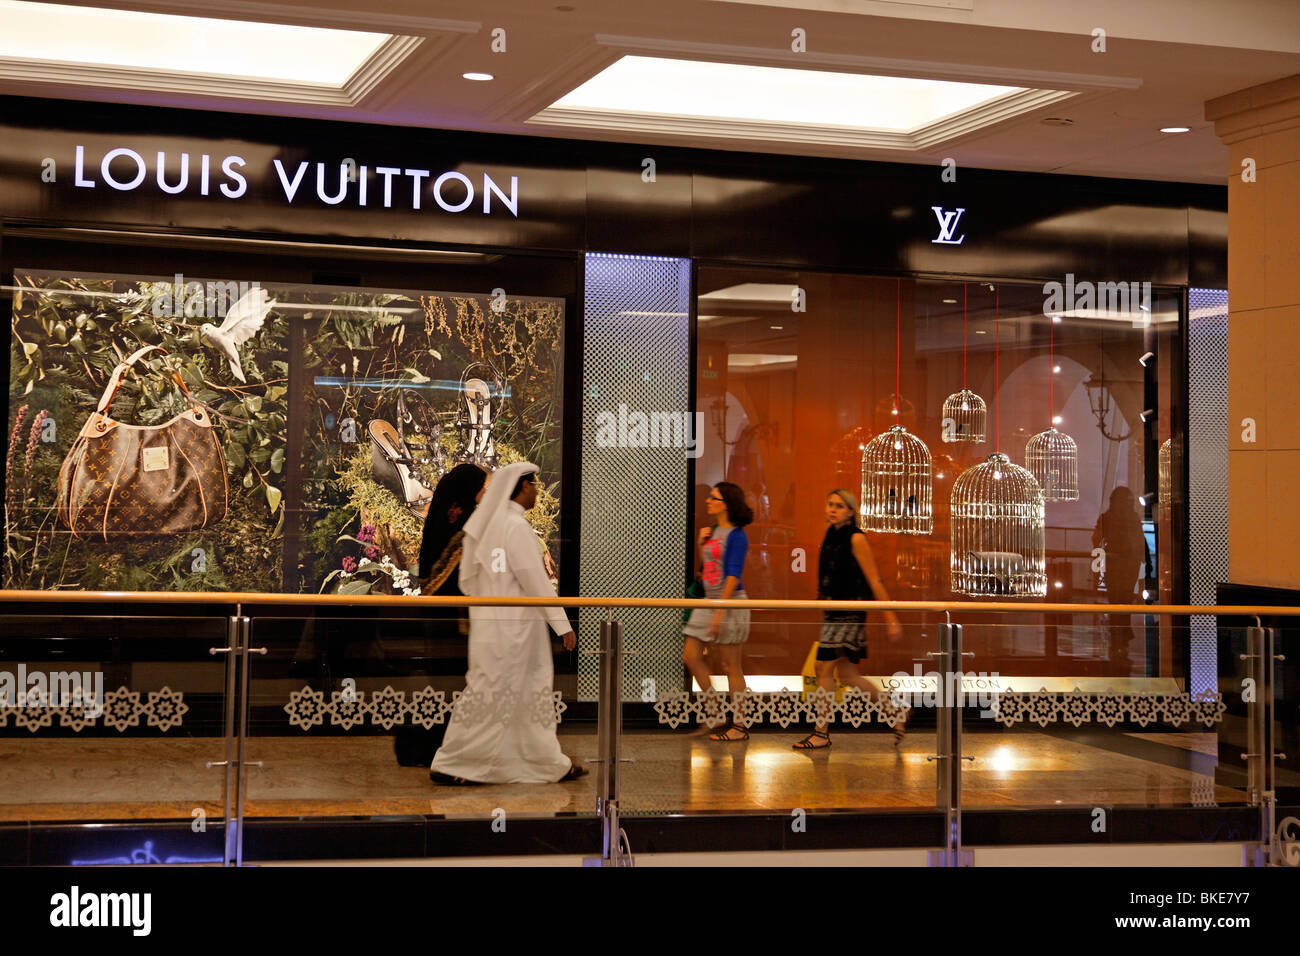 Louis Vuitton - Dubai Mall of the Emirates #castrowoodfloors